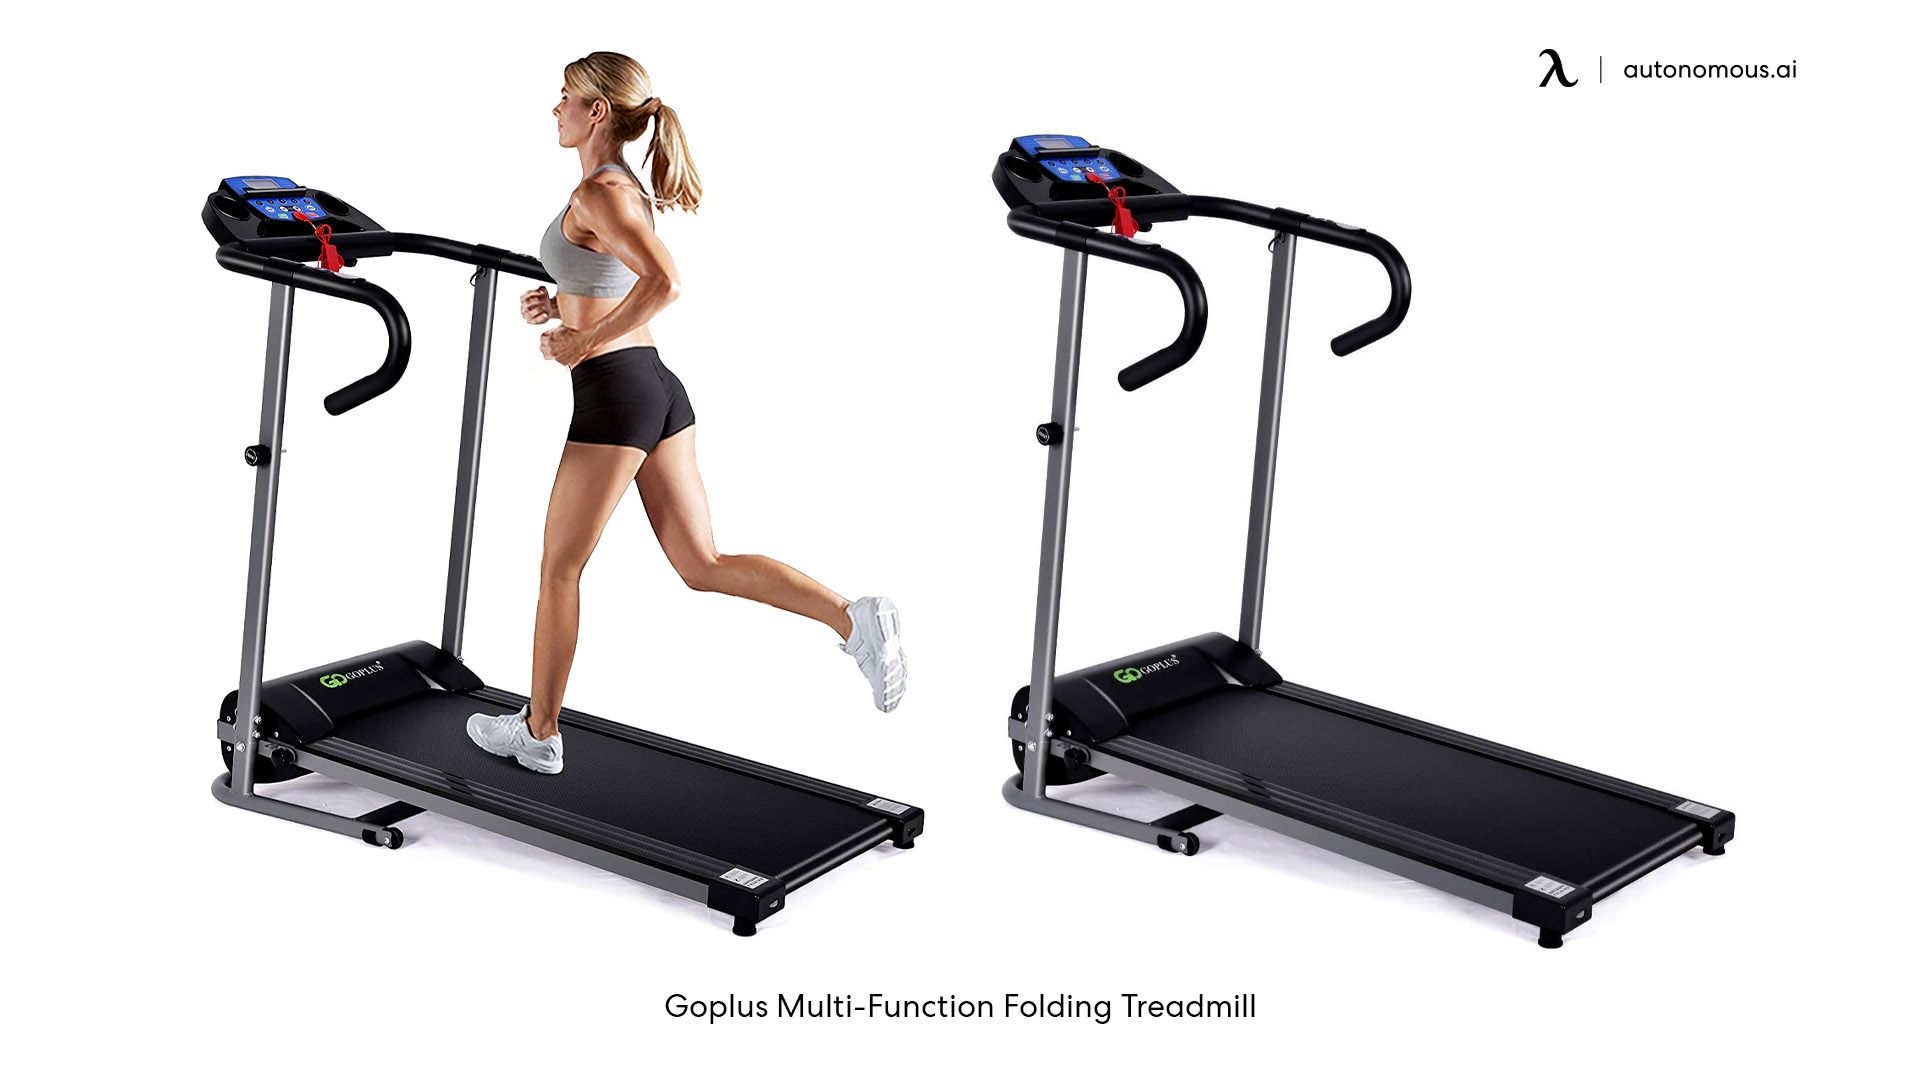 Goplus Multi-Function Folding Treadmill